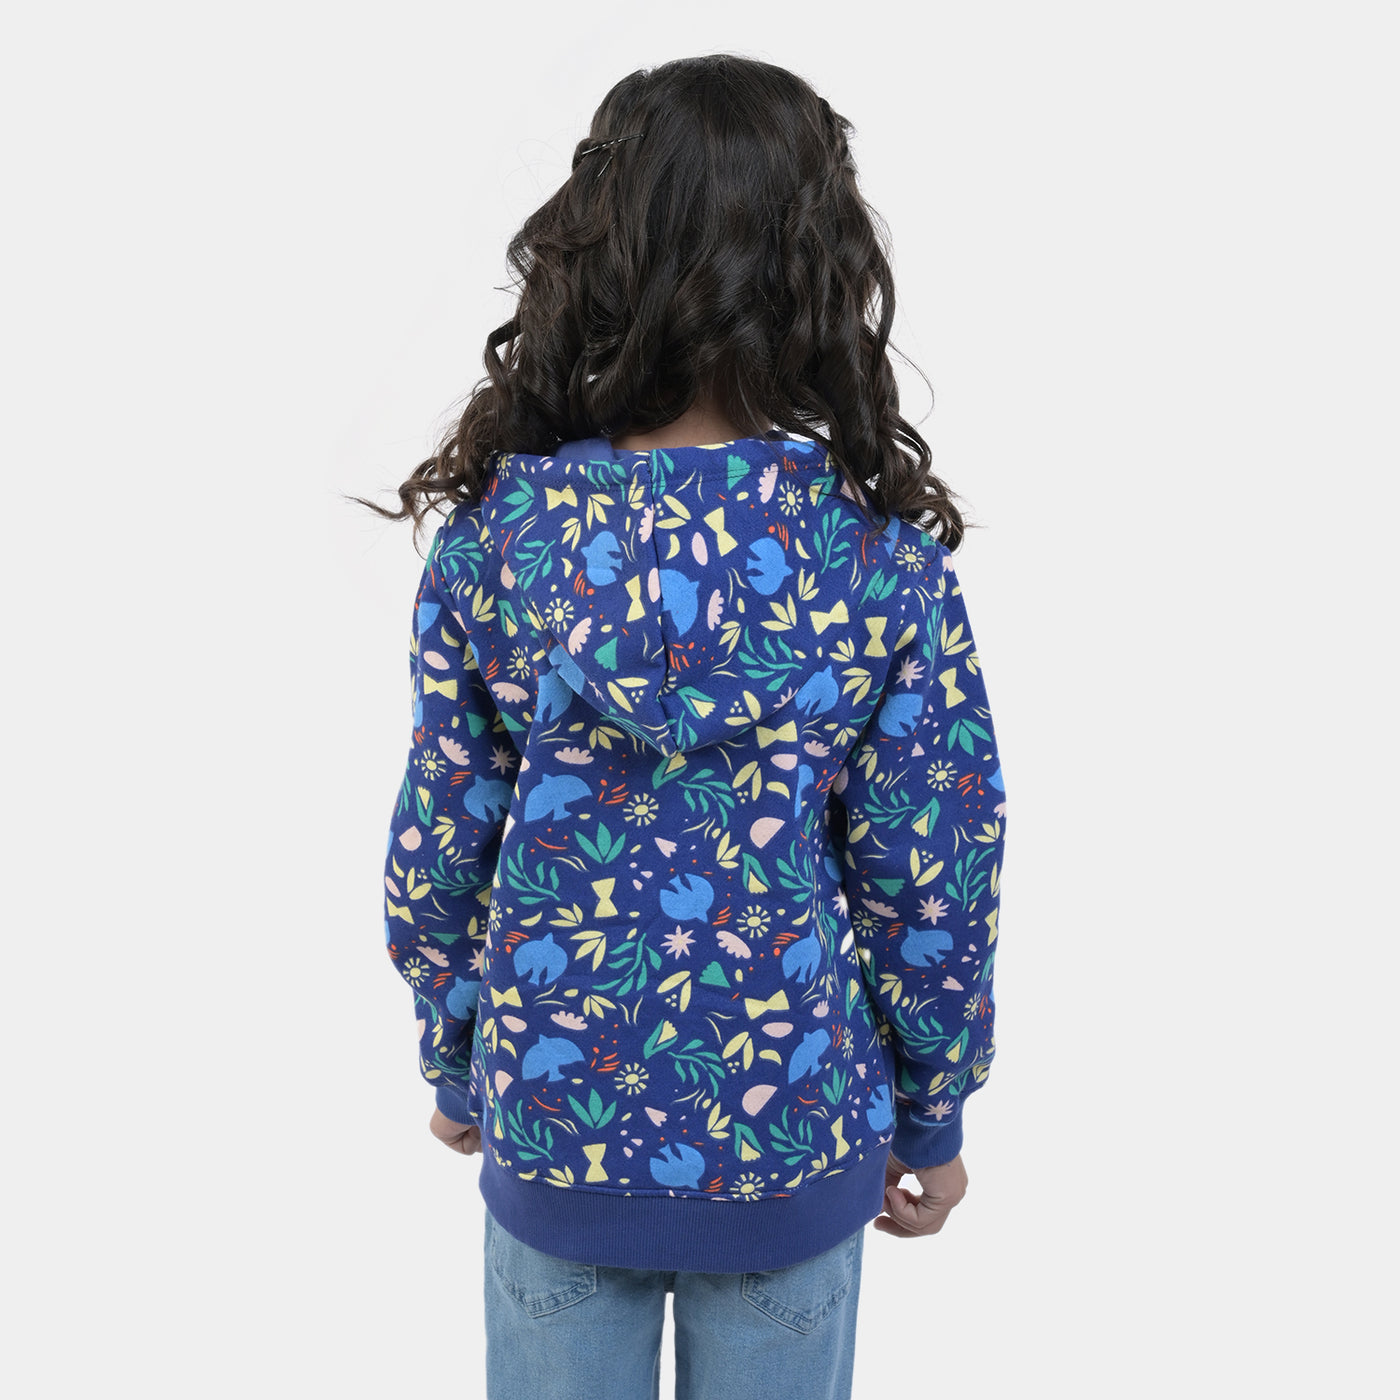 Girls Fleece Knitted Jacket Flowers -Navy Blue